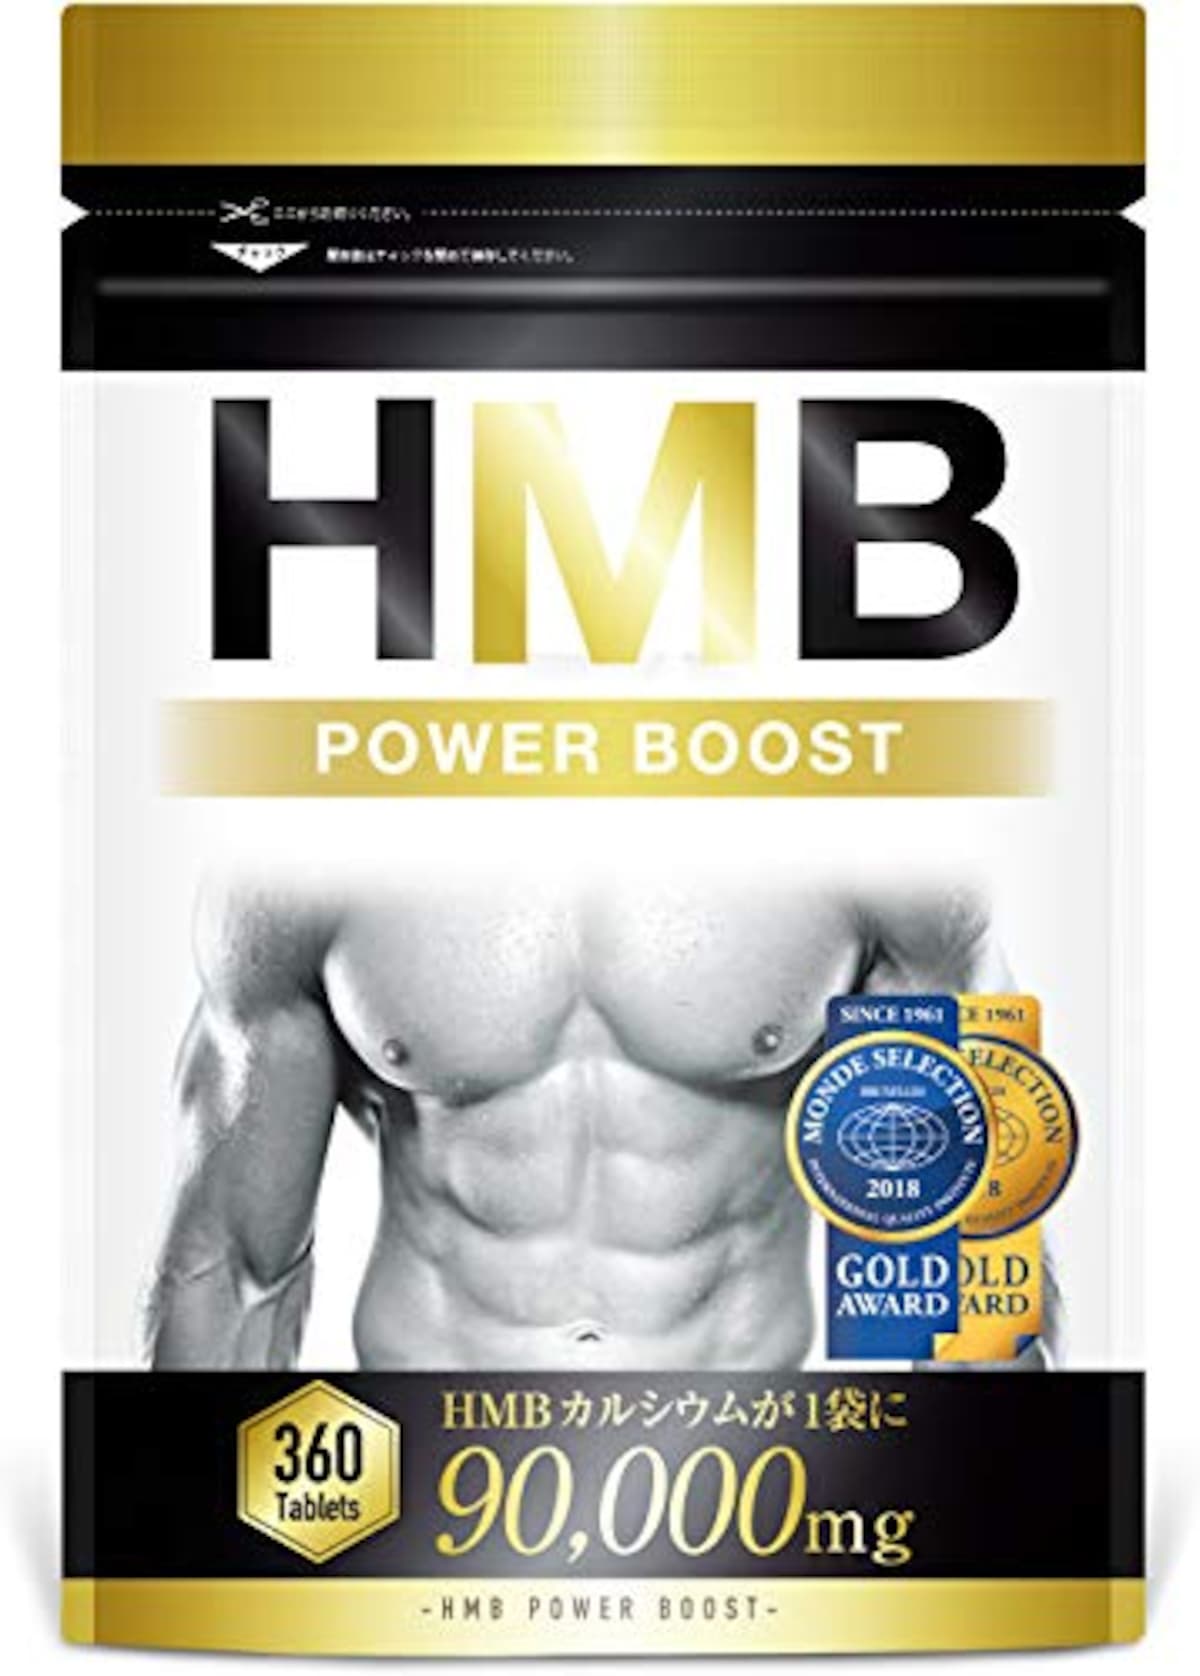 HMB POWER BOOST サプリメント